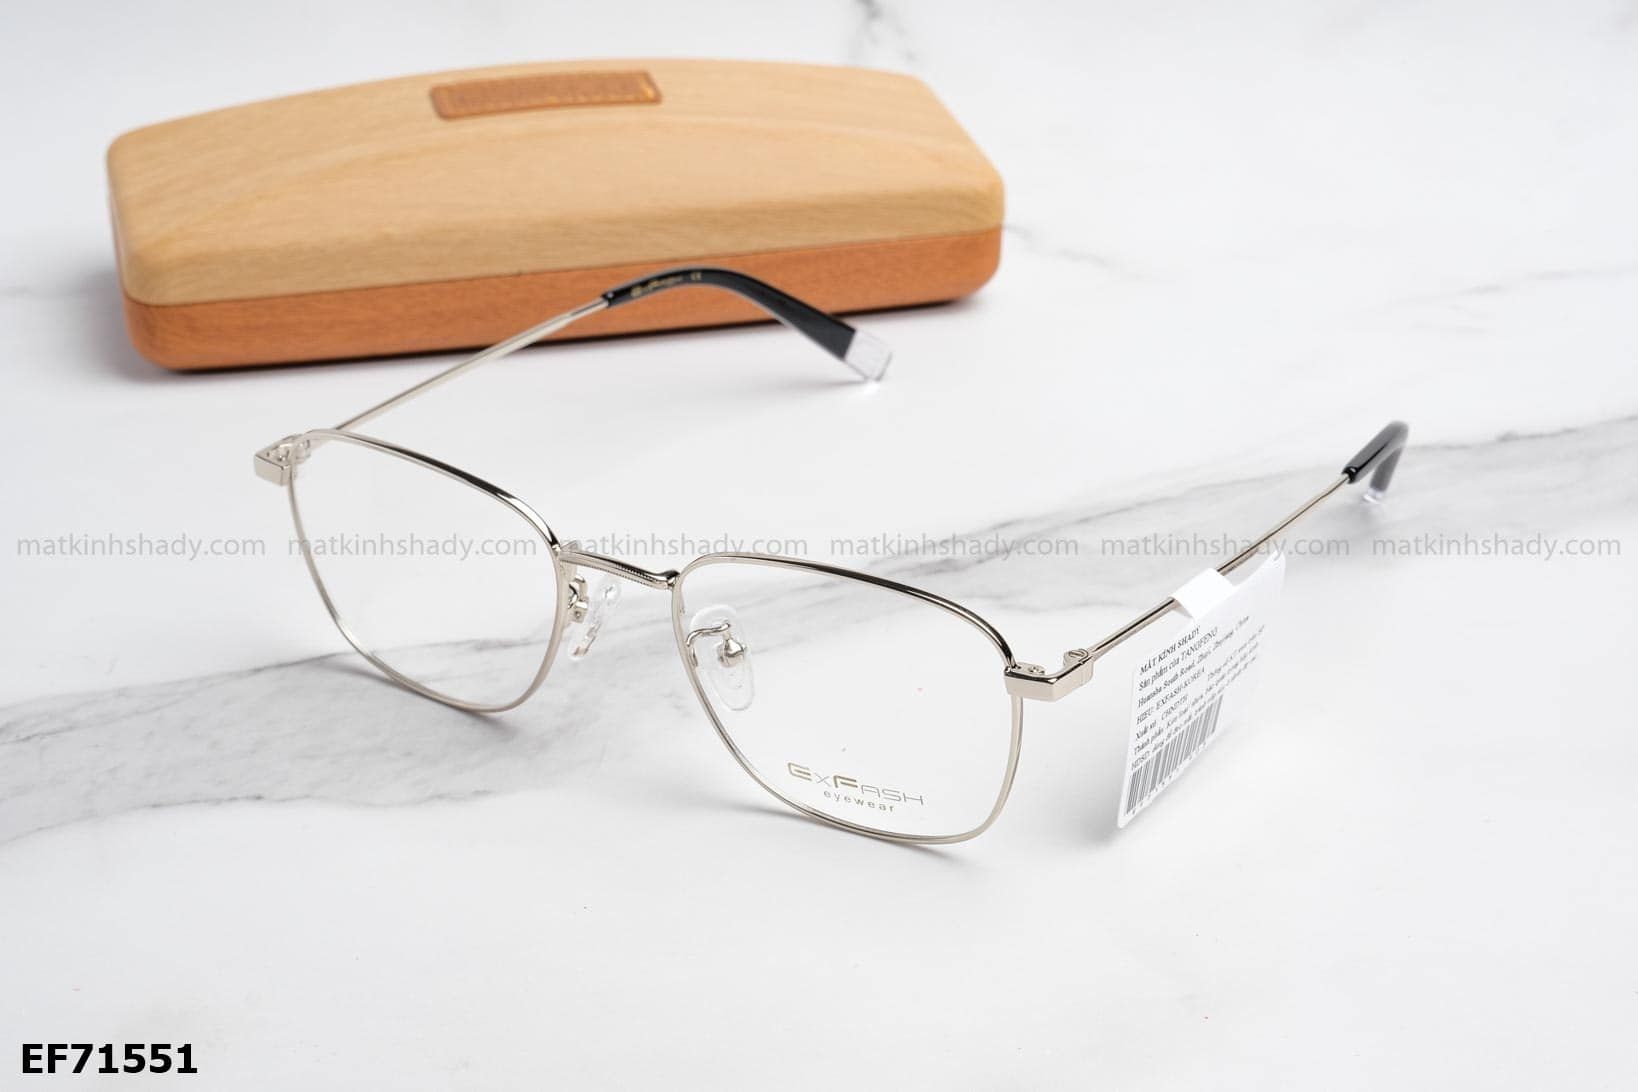  Exfash Eyewear - Glasses - EF71551 